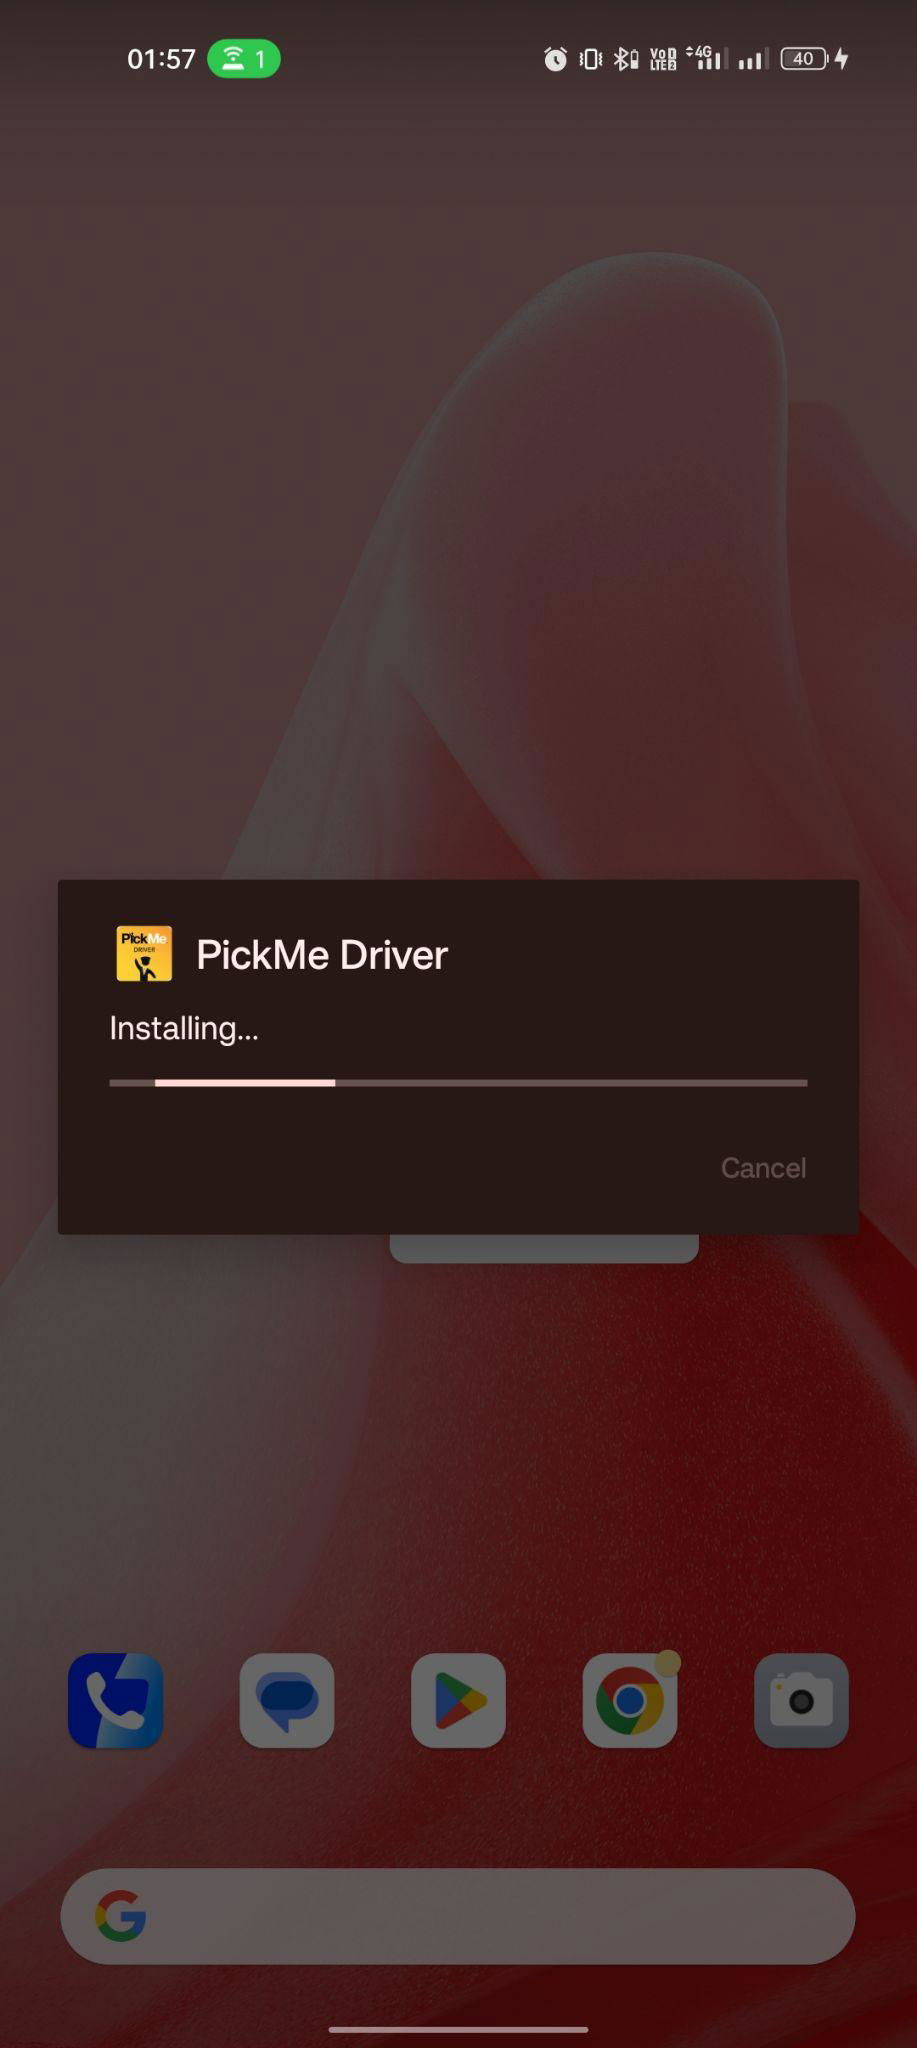 PickMe Driver apk installing